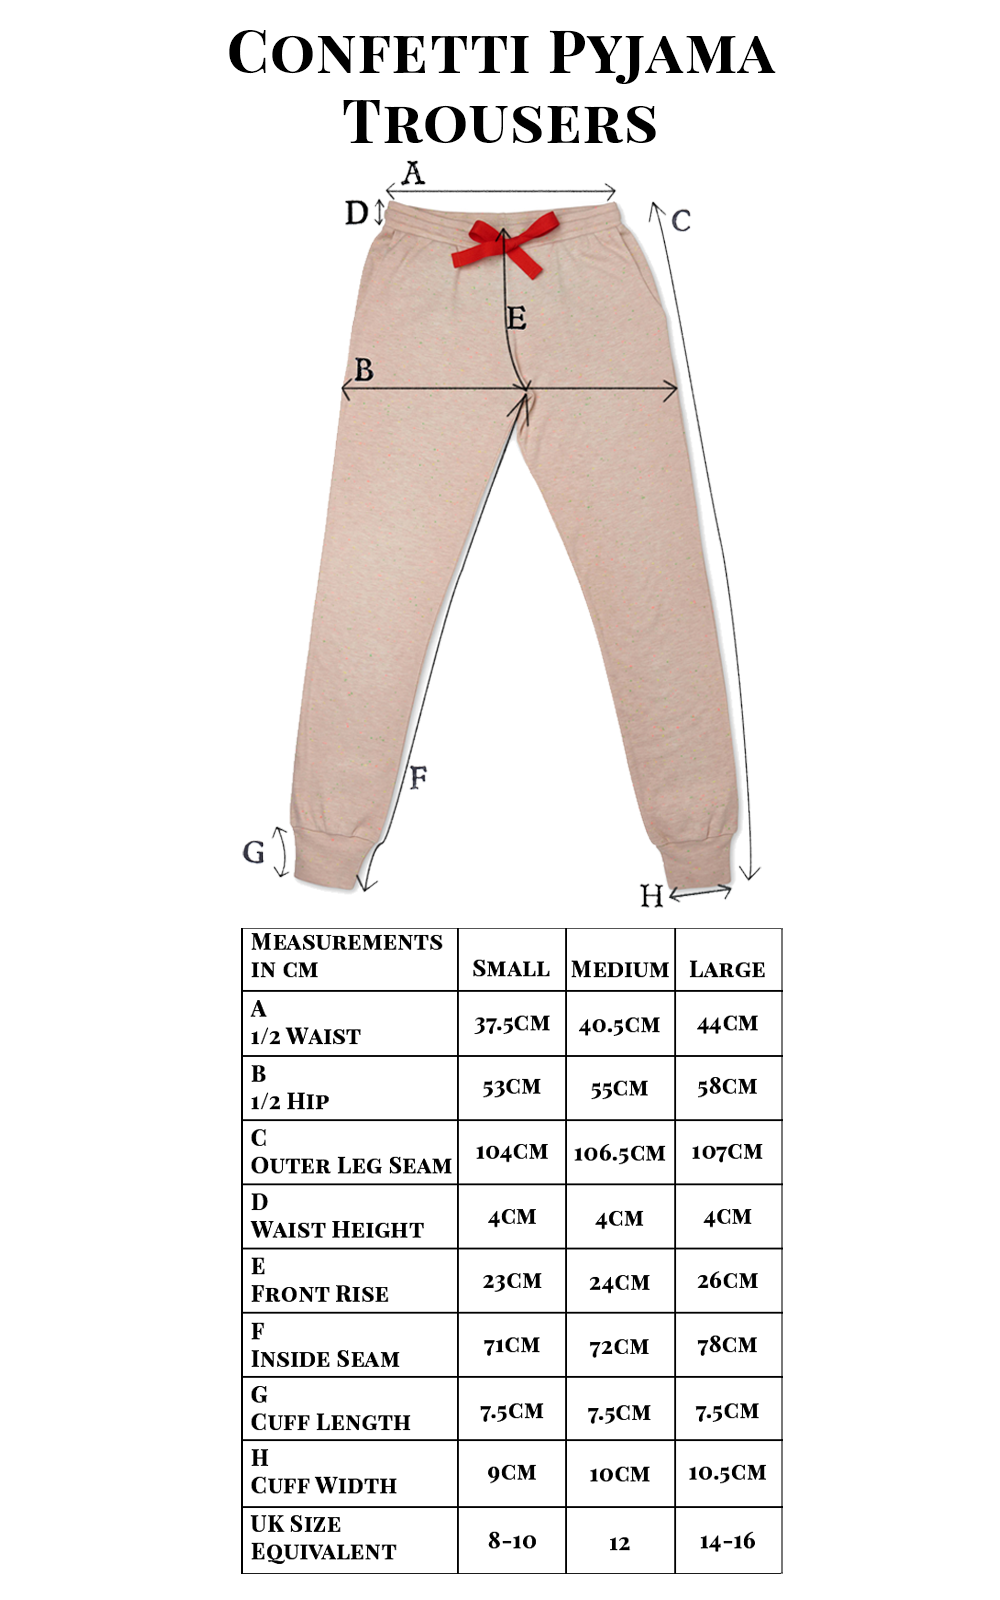 Tessie Confetti Oat Pyjama Trousers | Women's Pyjama Trousers | Ladies PJ Bottoms | Nep Fabric | Beige Pyjama Trousers with Pockets | Cuffed Pyjama Bottoms | Size Guide